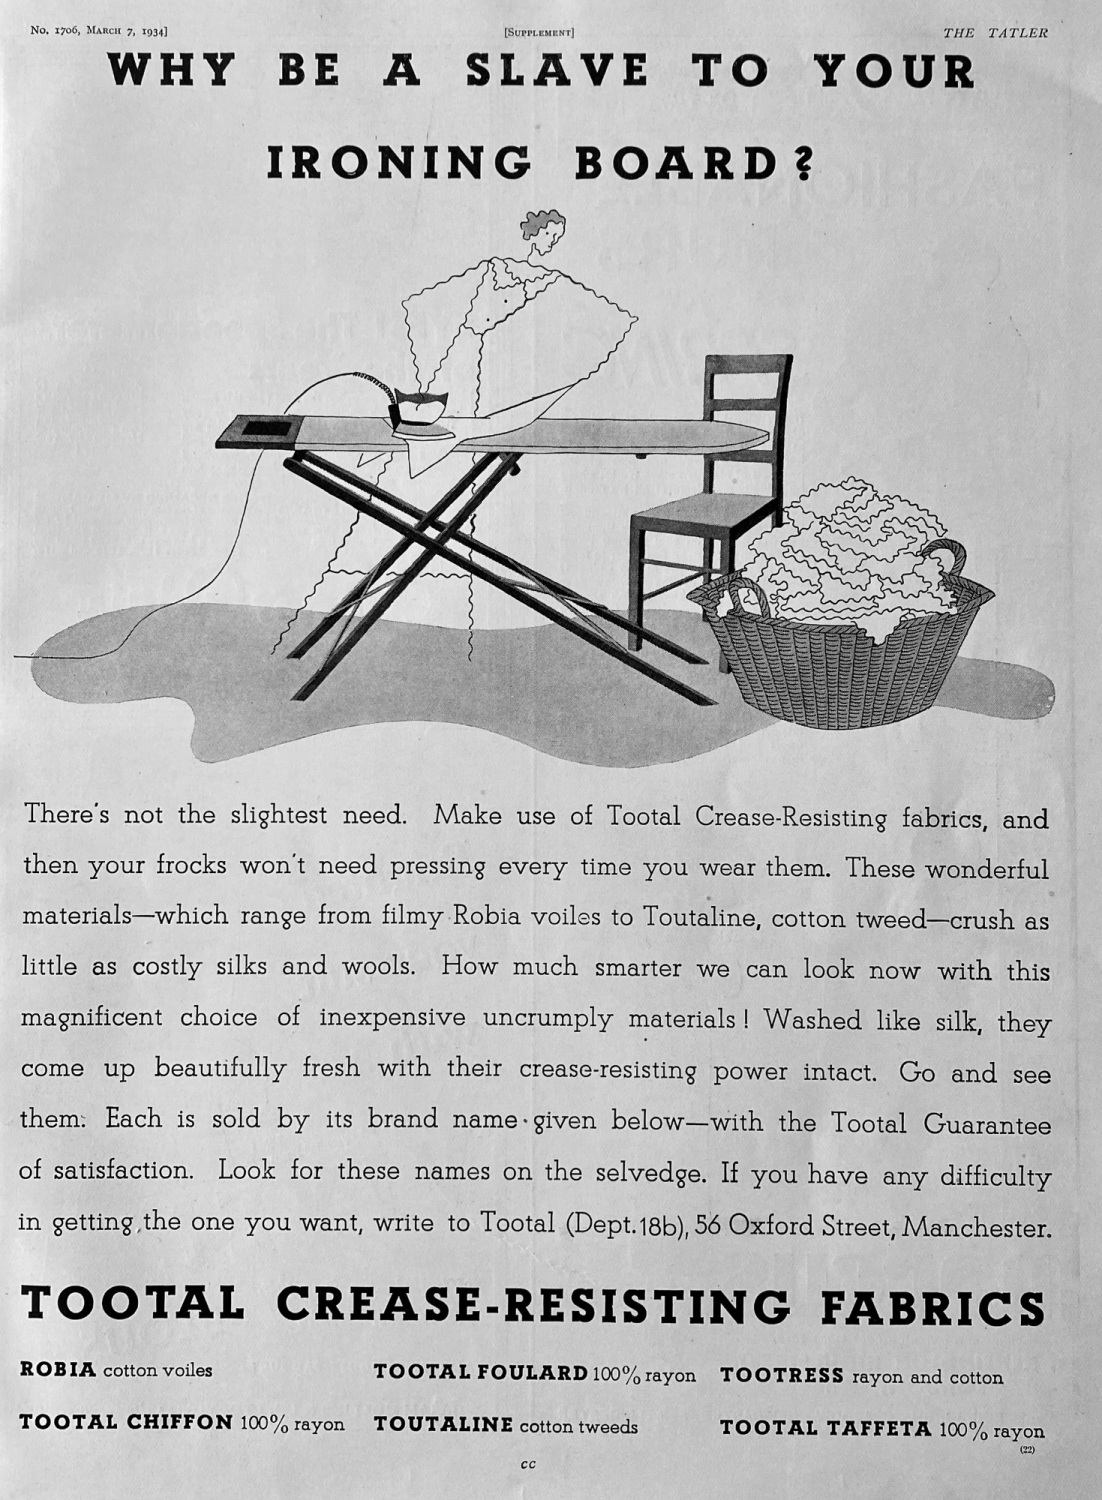 Tiootal Crease-Resisting Fabrics.  1934.